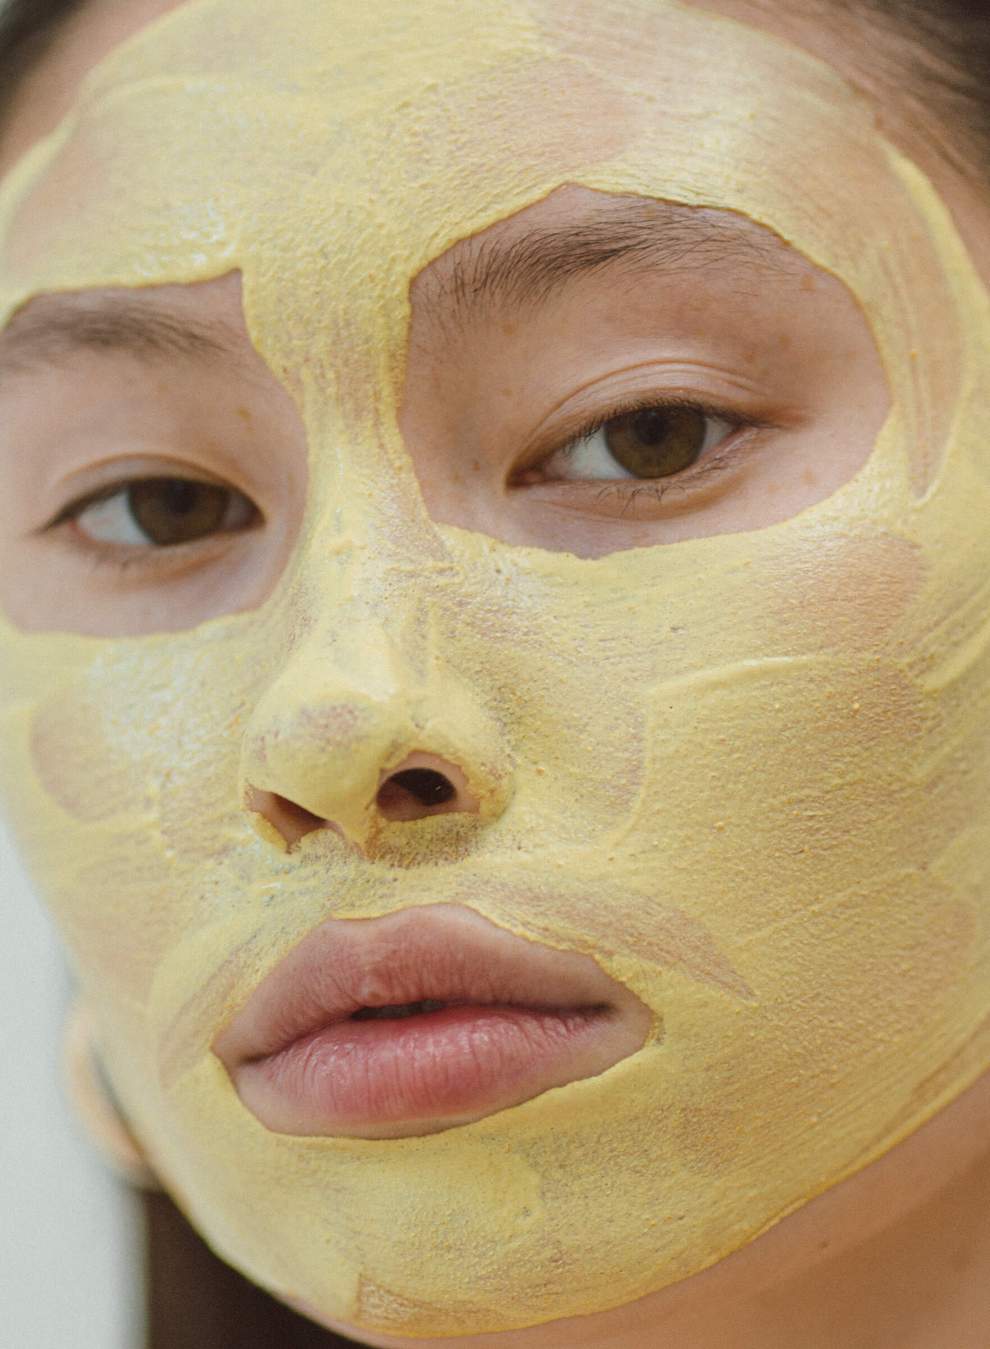 Yellow Beauty Glow Dust Facial Mask